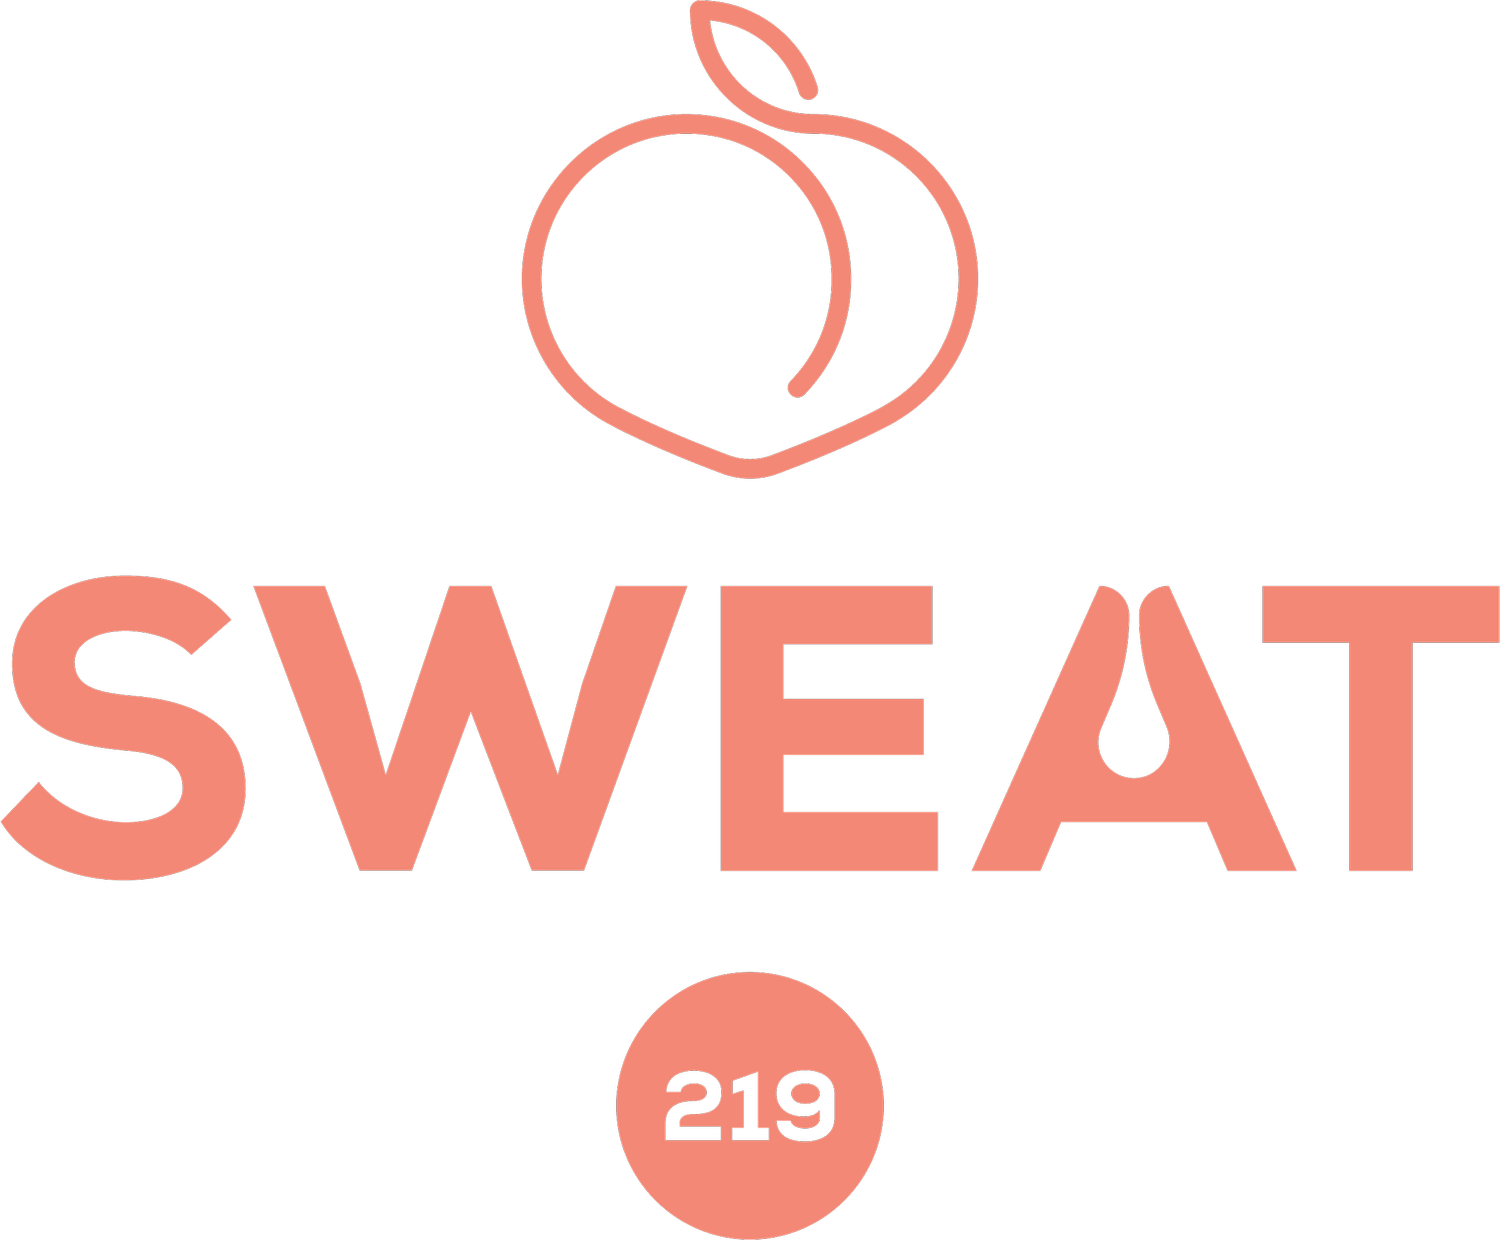 Sweat 219